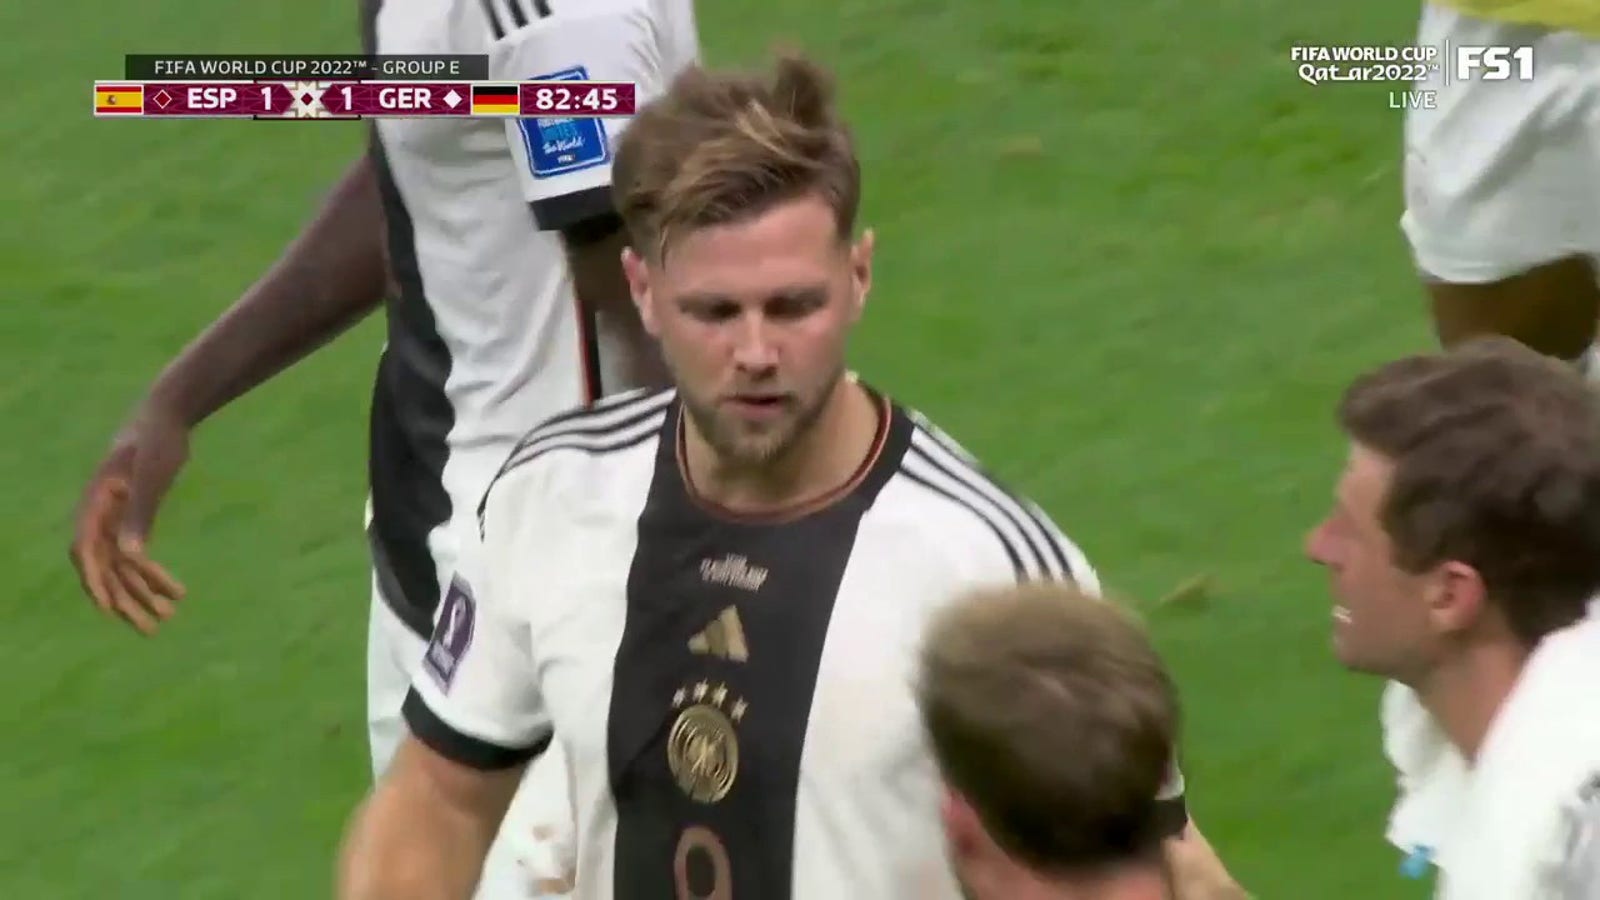 Germany's Niklas Volkrug scores a goal against Spain in the 83rd minute